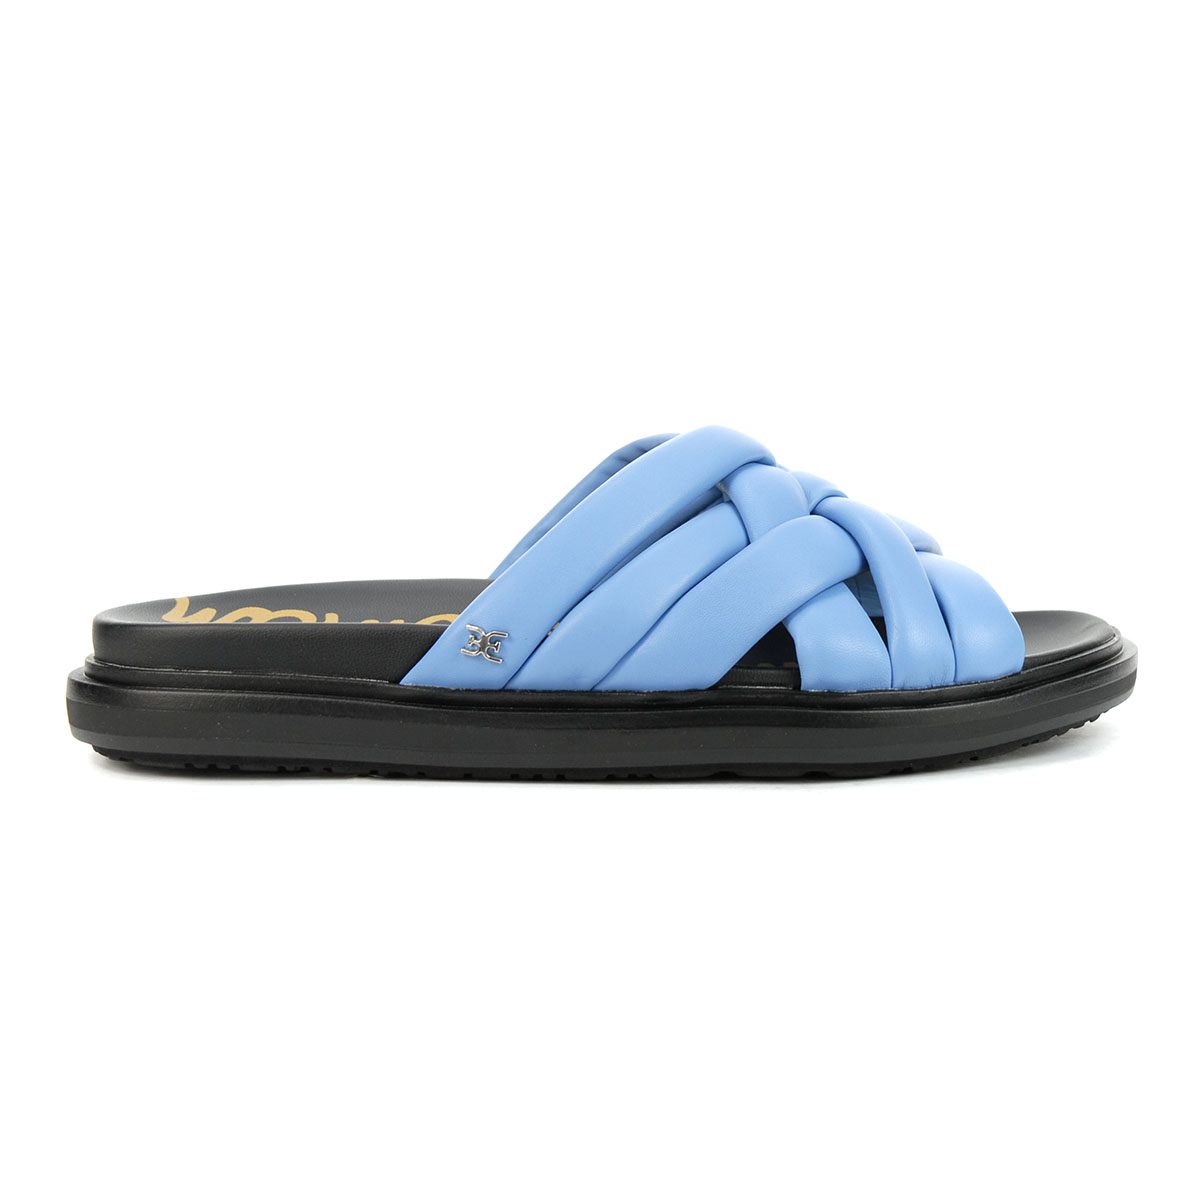 Sam Edelman Vaugn True Blue/Seville Nappa Leather Sandals H5810L1400